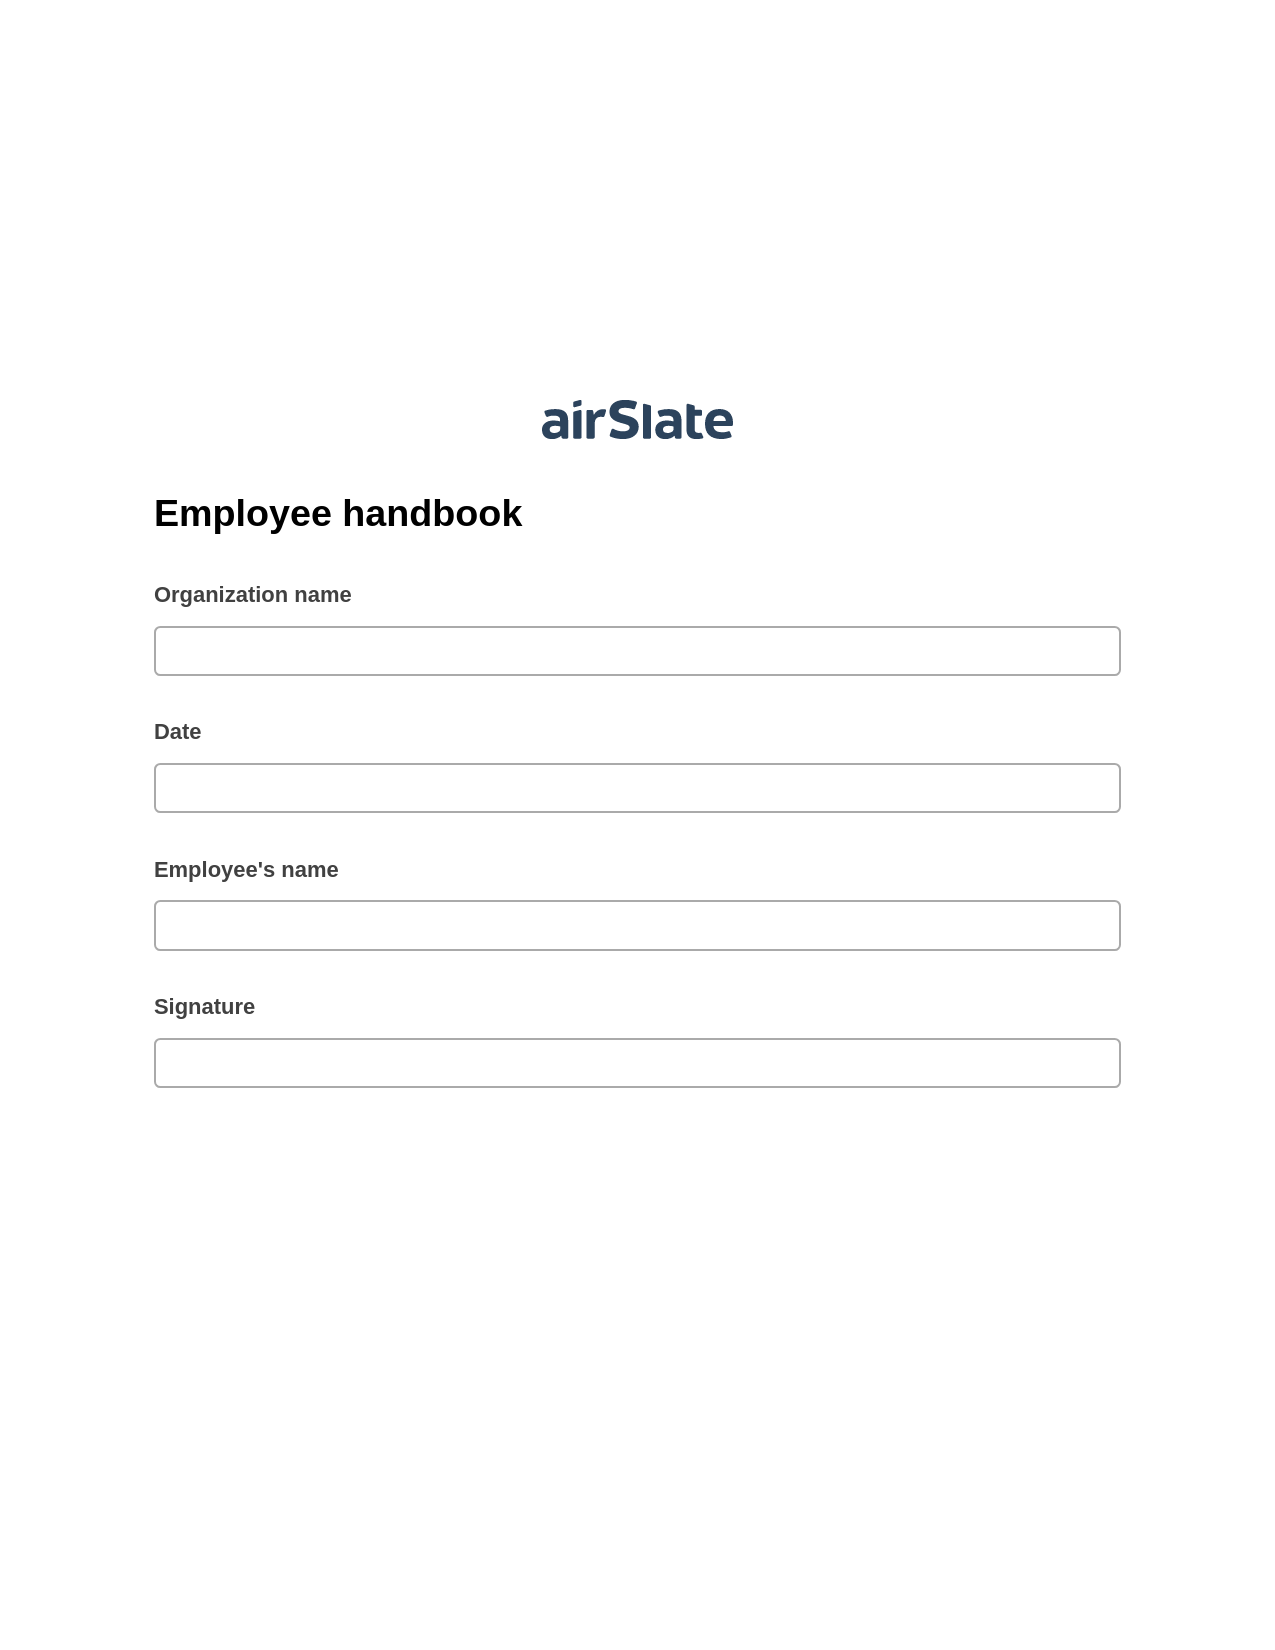 Multirole Employee handbook Pre-fill from CSV File Bot, Lock the slate bot, Export to Smartsheet